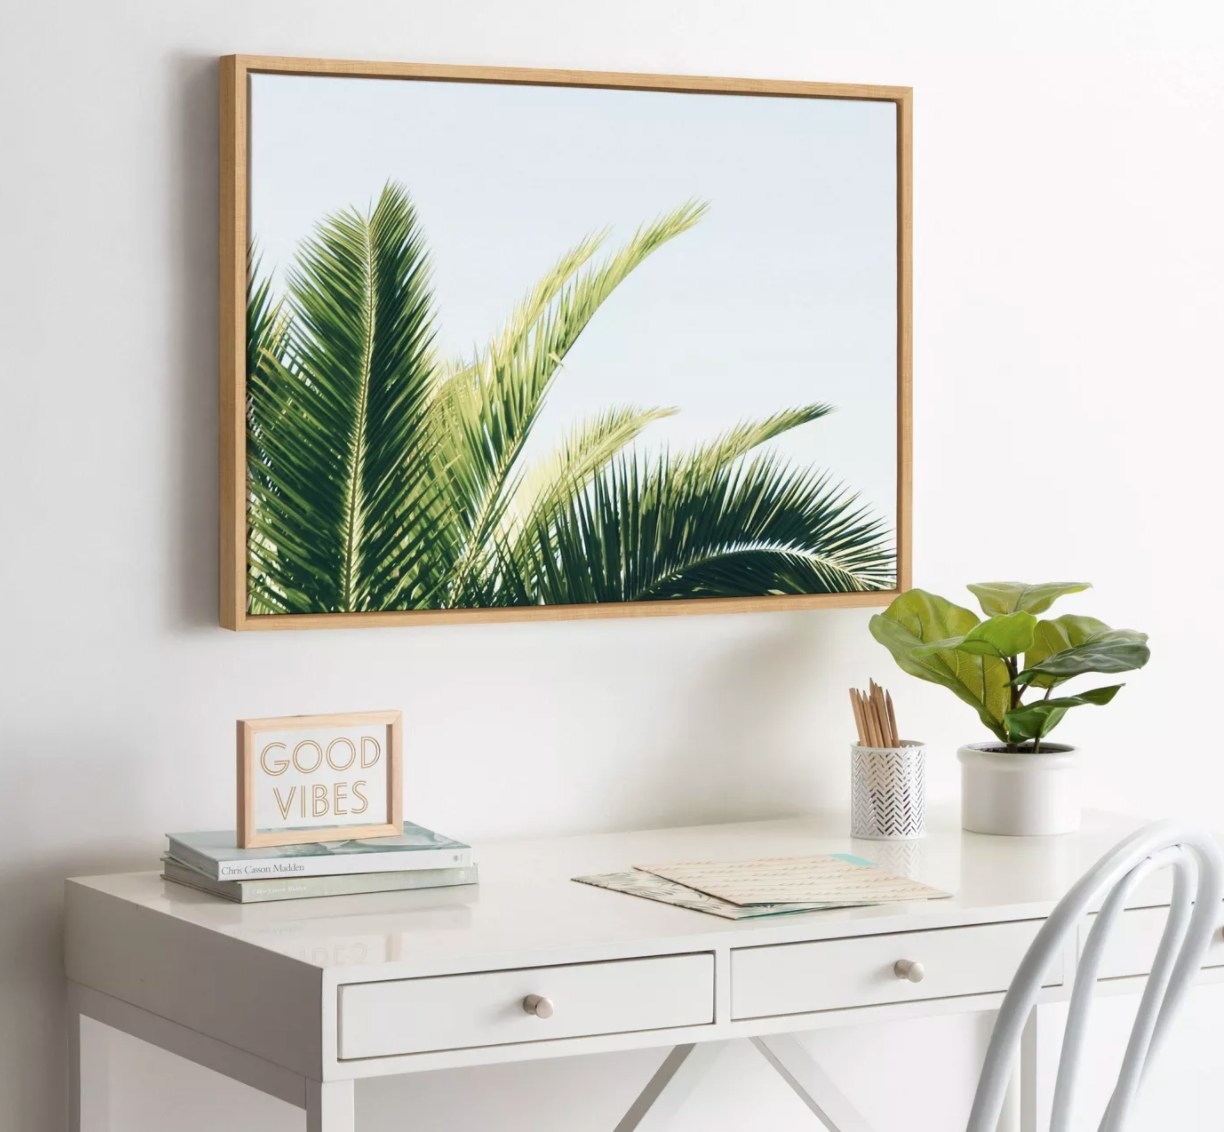 The tropical palm print